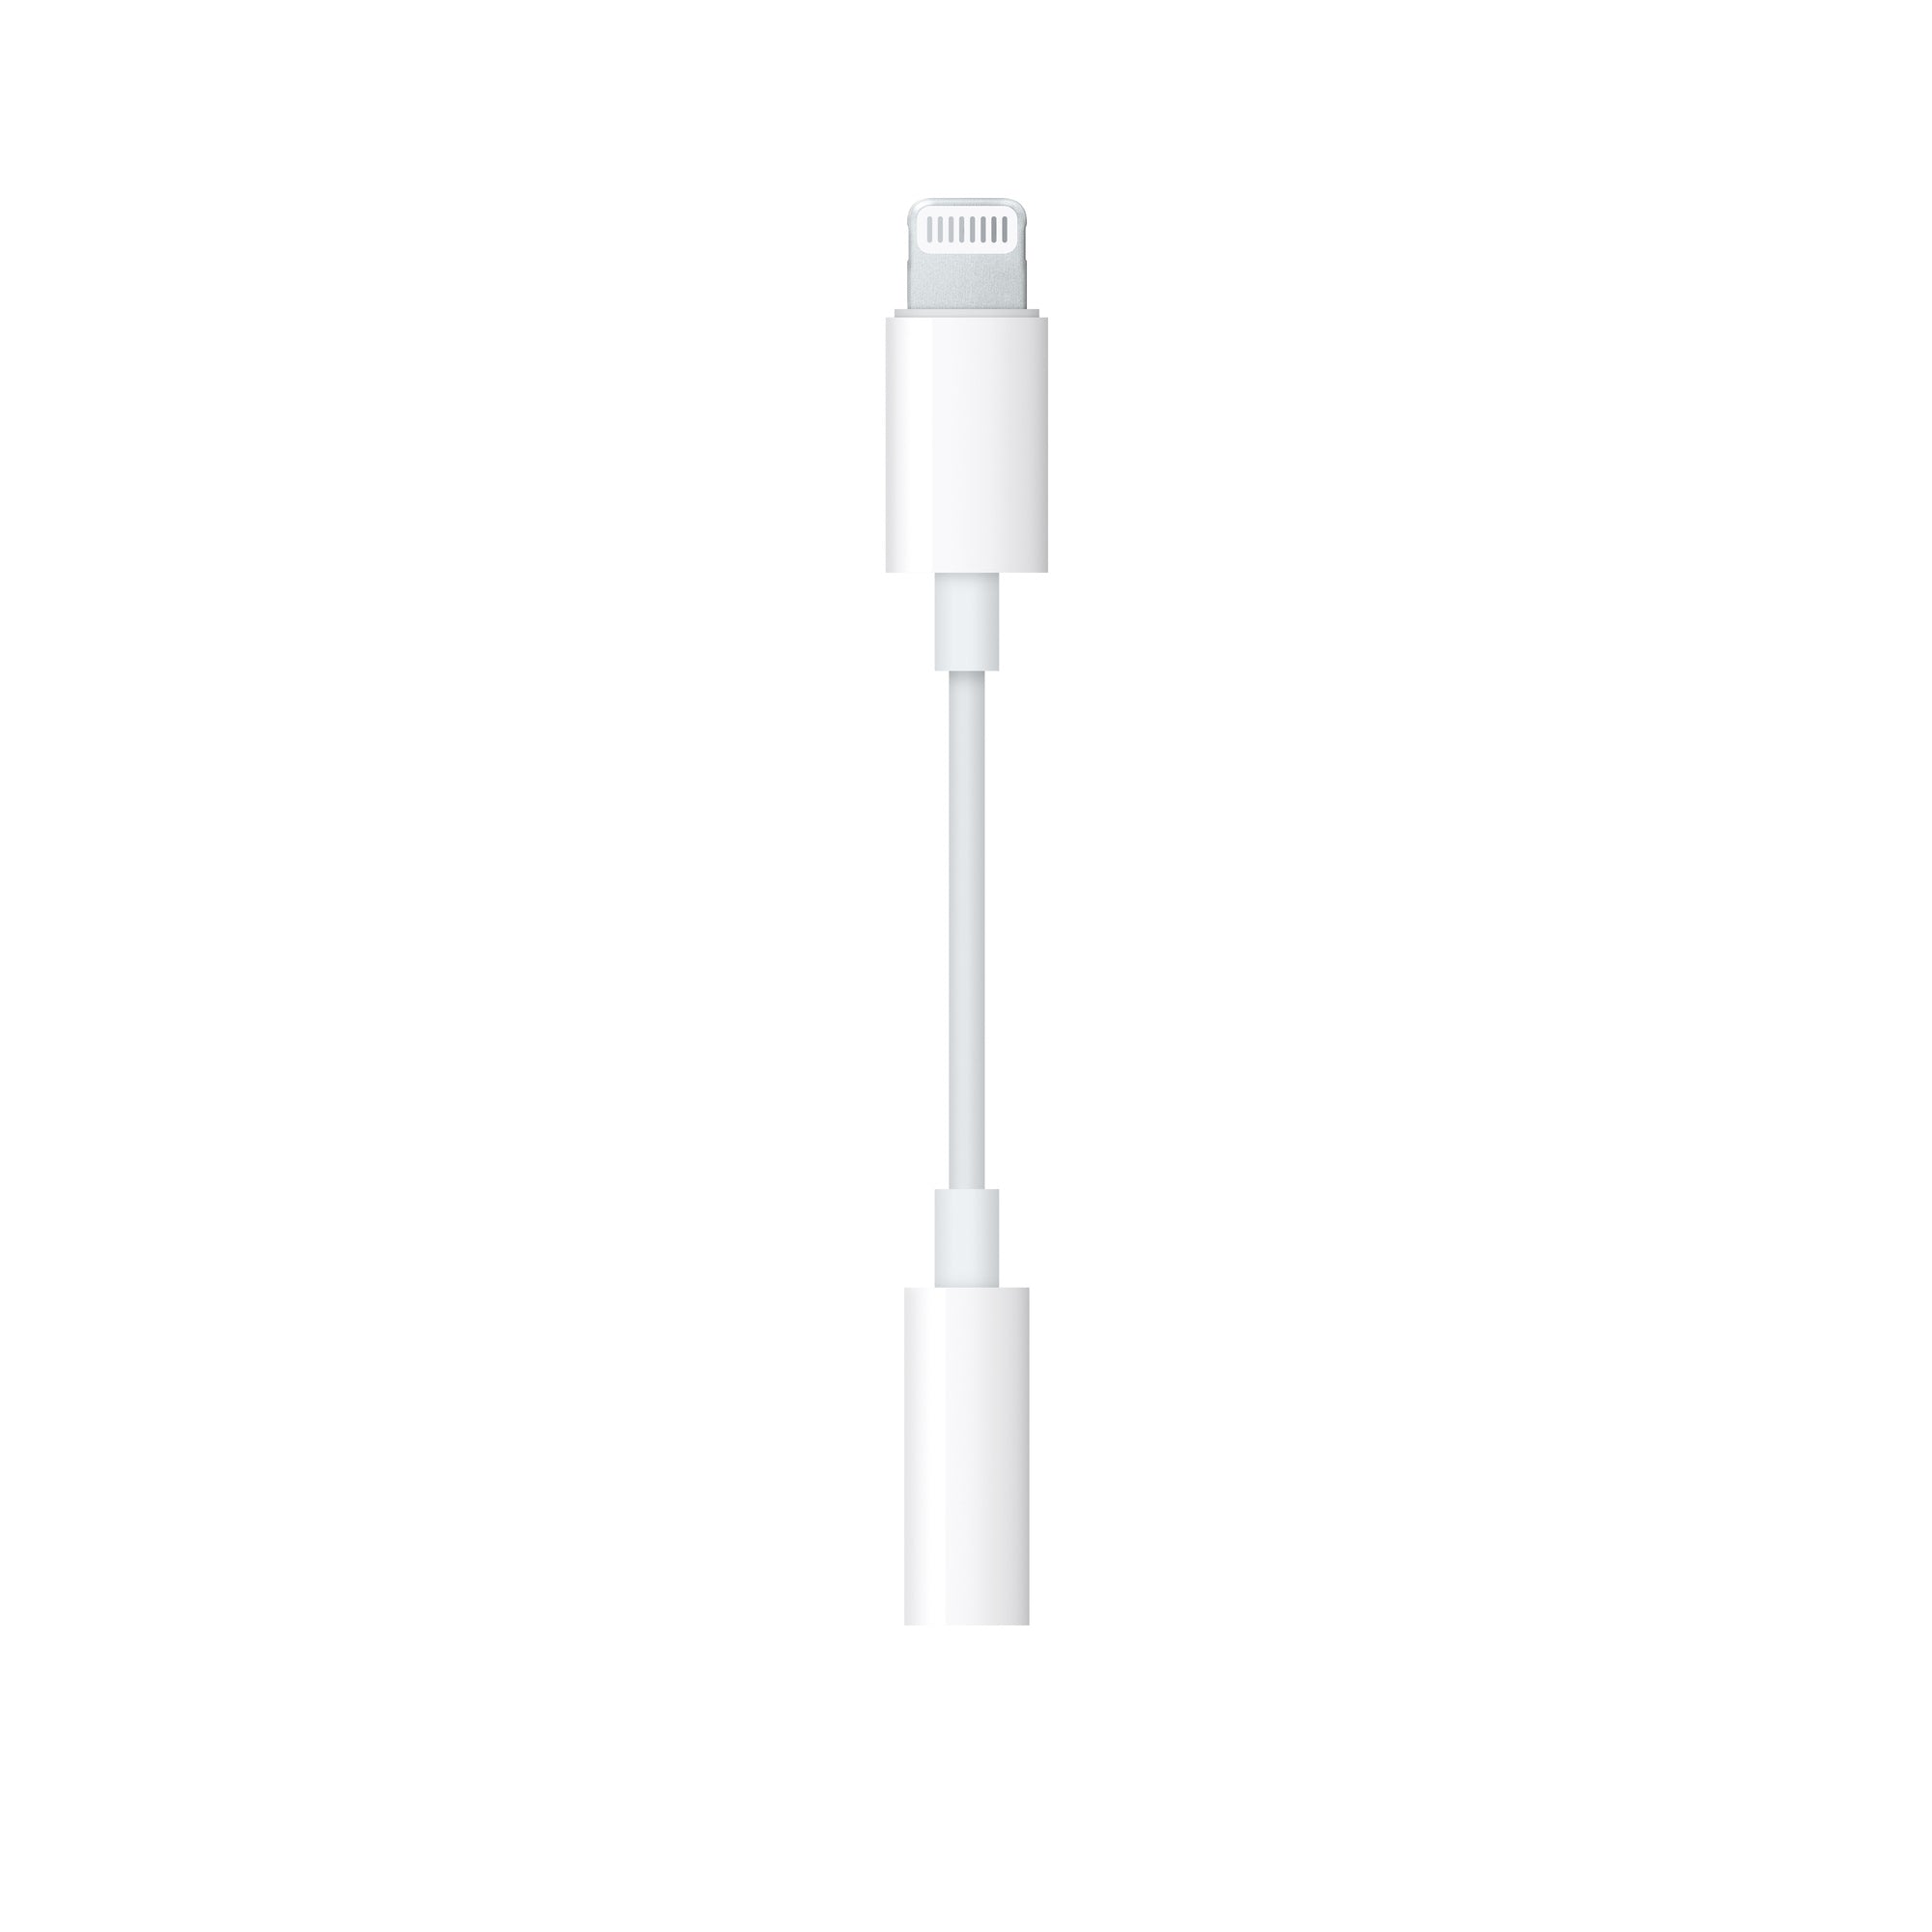 Apple iPad mini 2 Heaphone Jack Connector (Lightning to 3.5mm)